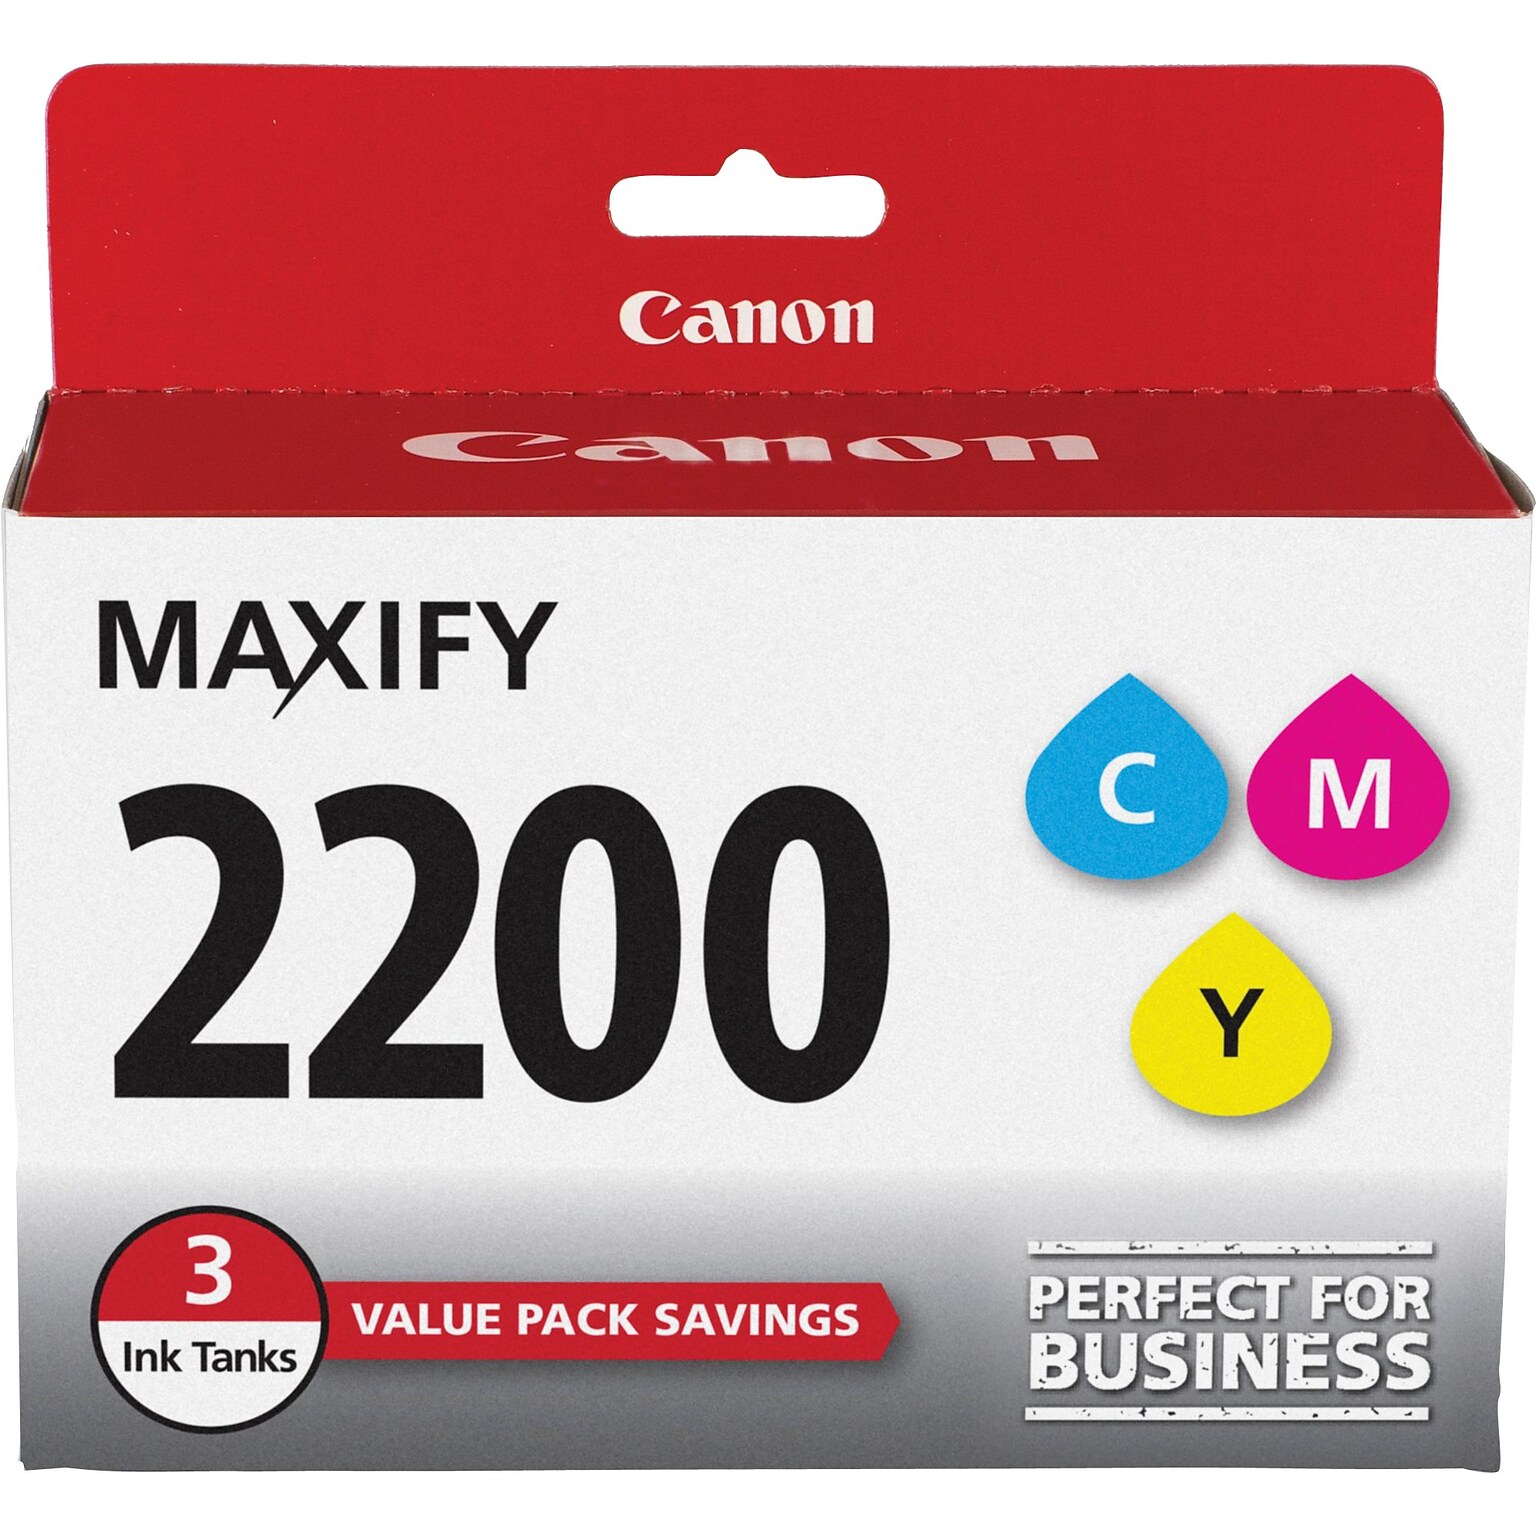 Canon 2200 Cyan/Magenta/Yellow Ink Cartridge, 3/Pack (9304B005)